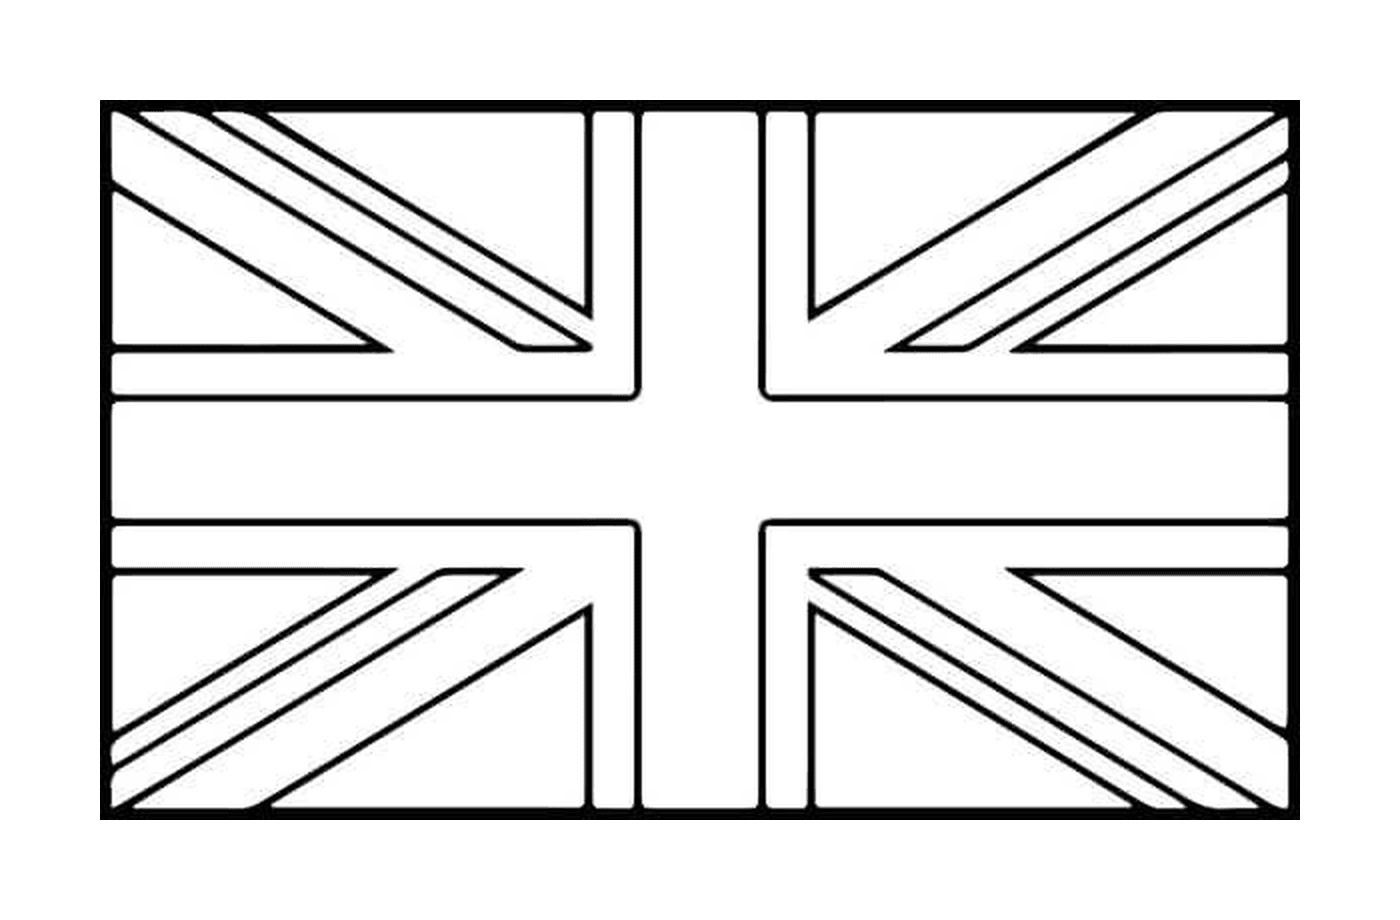   Un drapeau britannique 